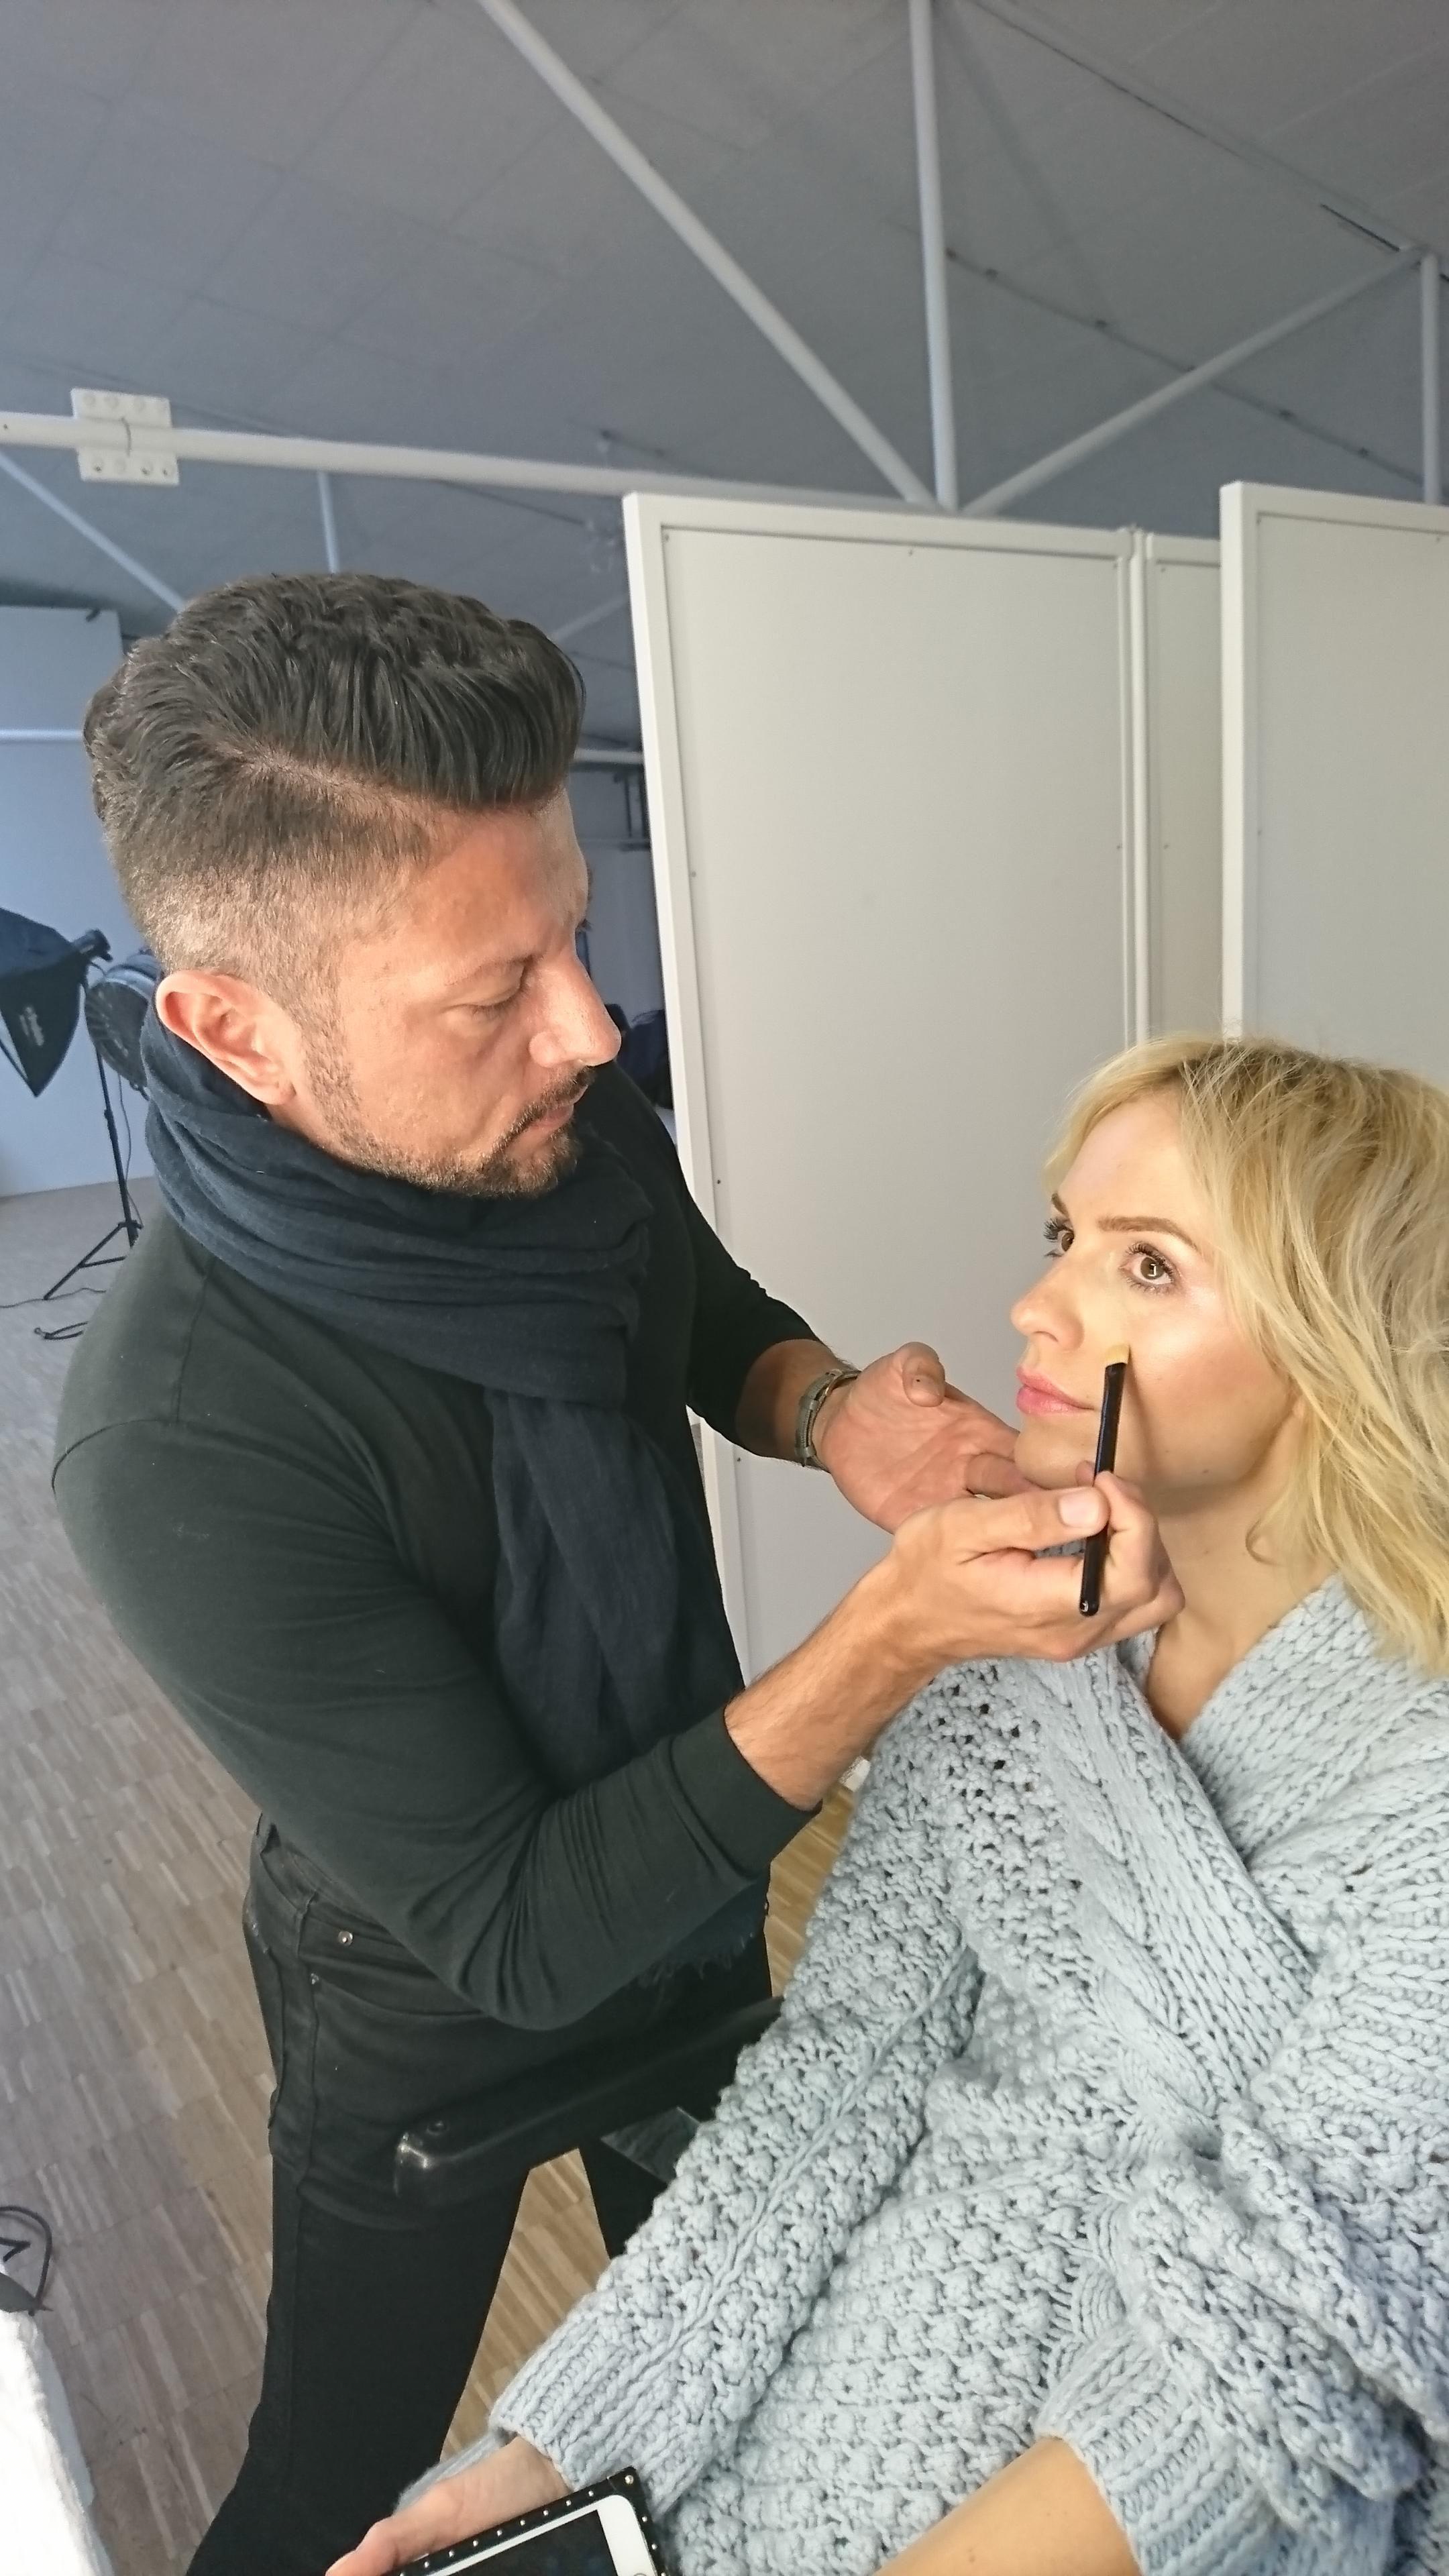 Bloggerin und Model-Mama Viktoria Rader backstage bei unserem Make-up-Shooting #shooting #beauty #bloggerin #makeup